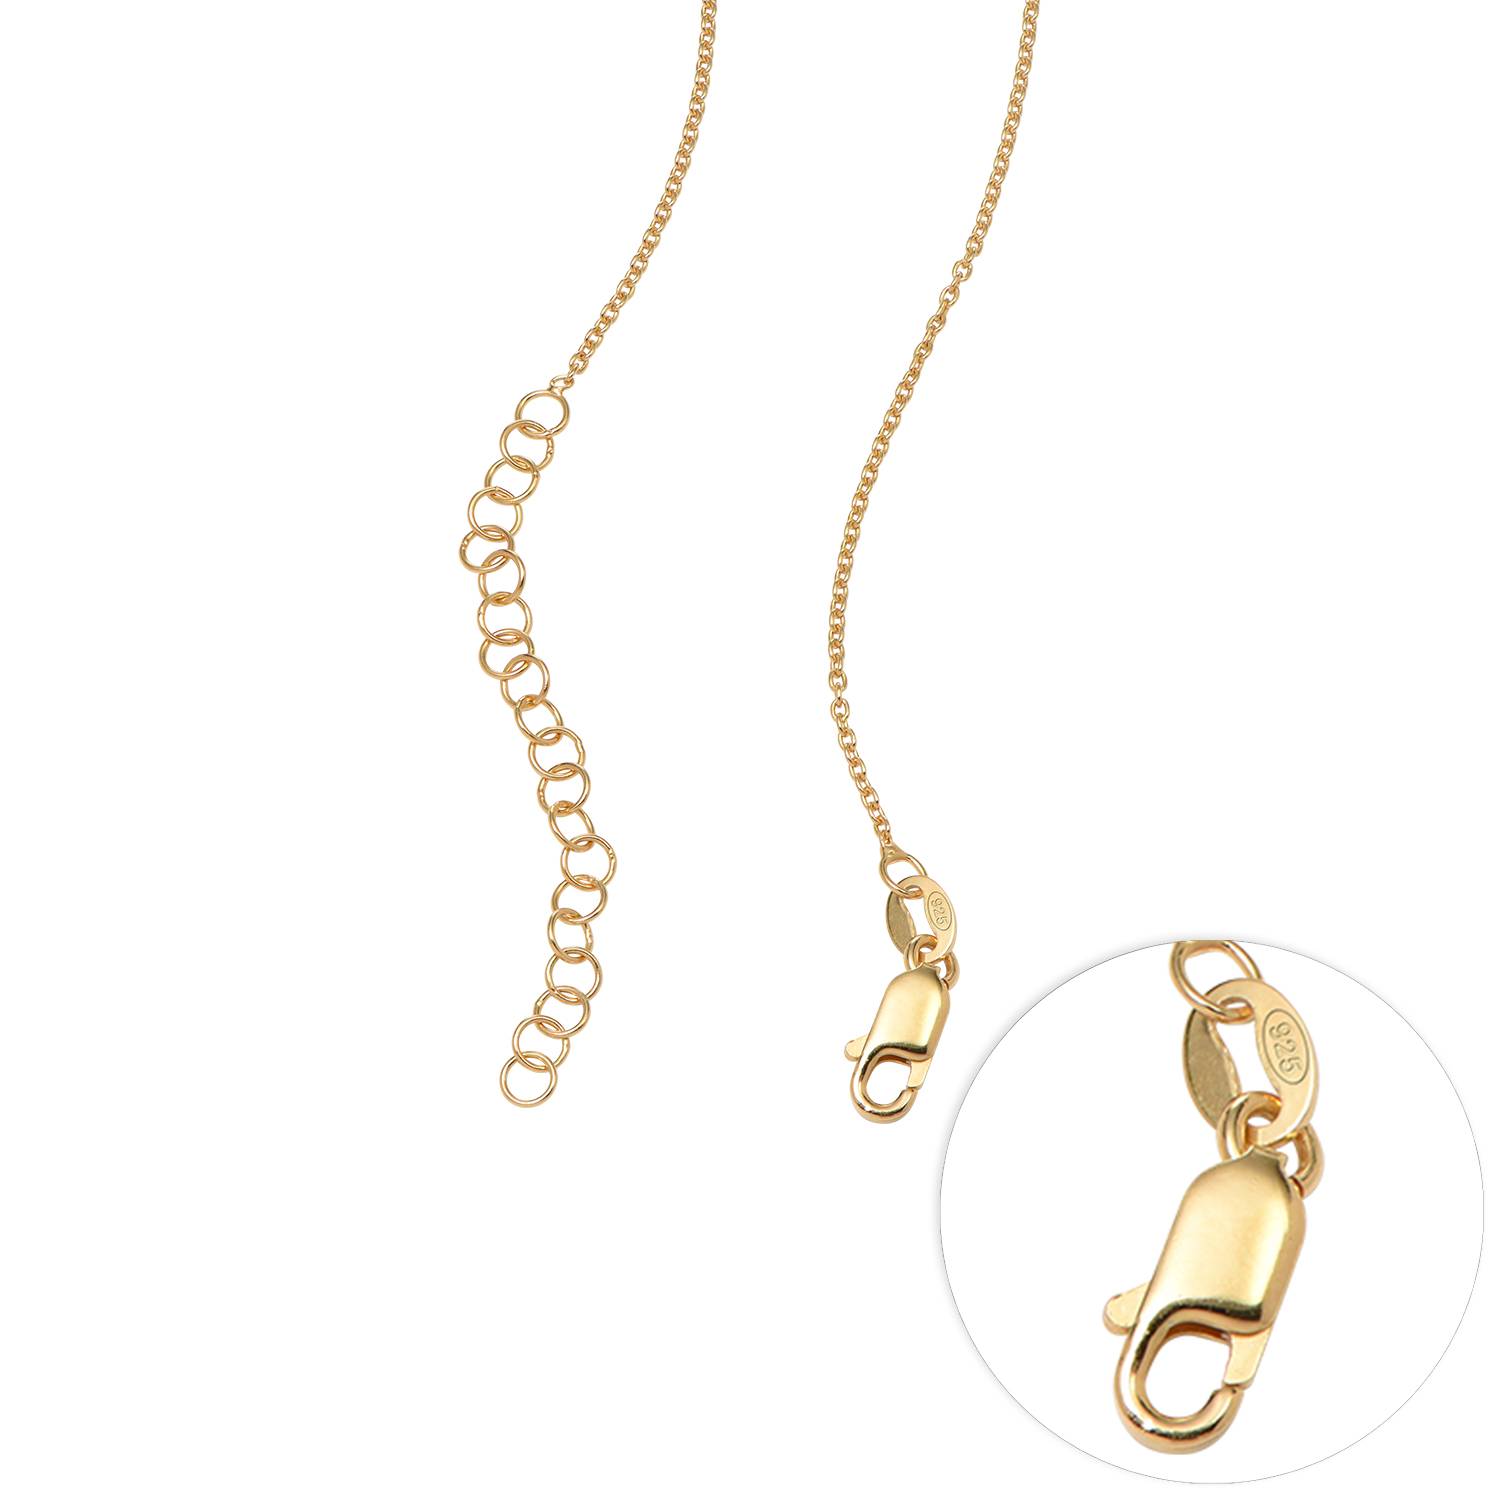 Blommande födelseblomma arabiskt namn halsband med diamant i 18K guld vermeil.-4 produktbilder